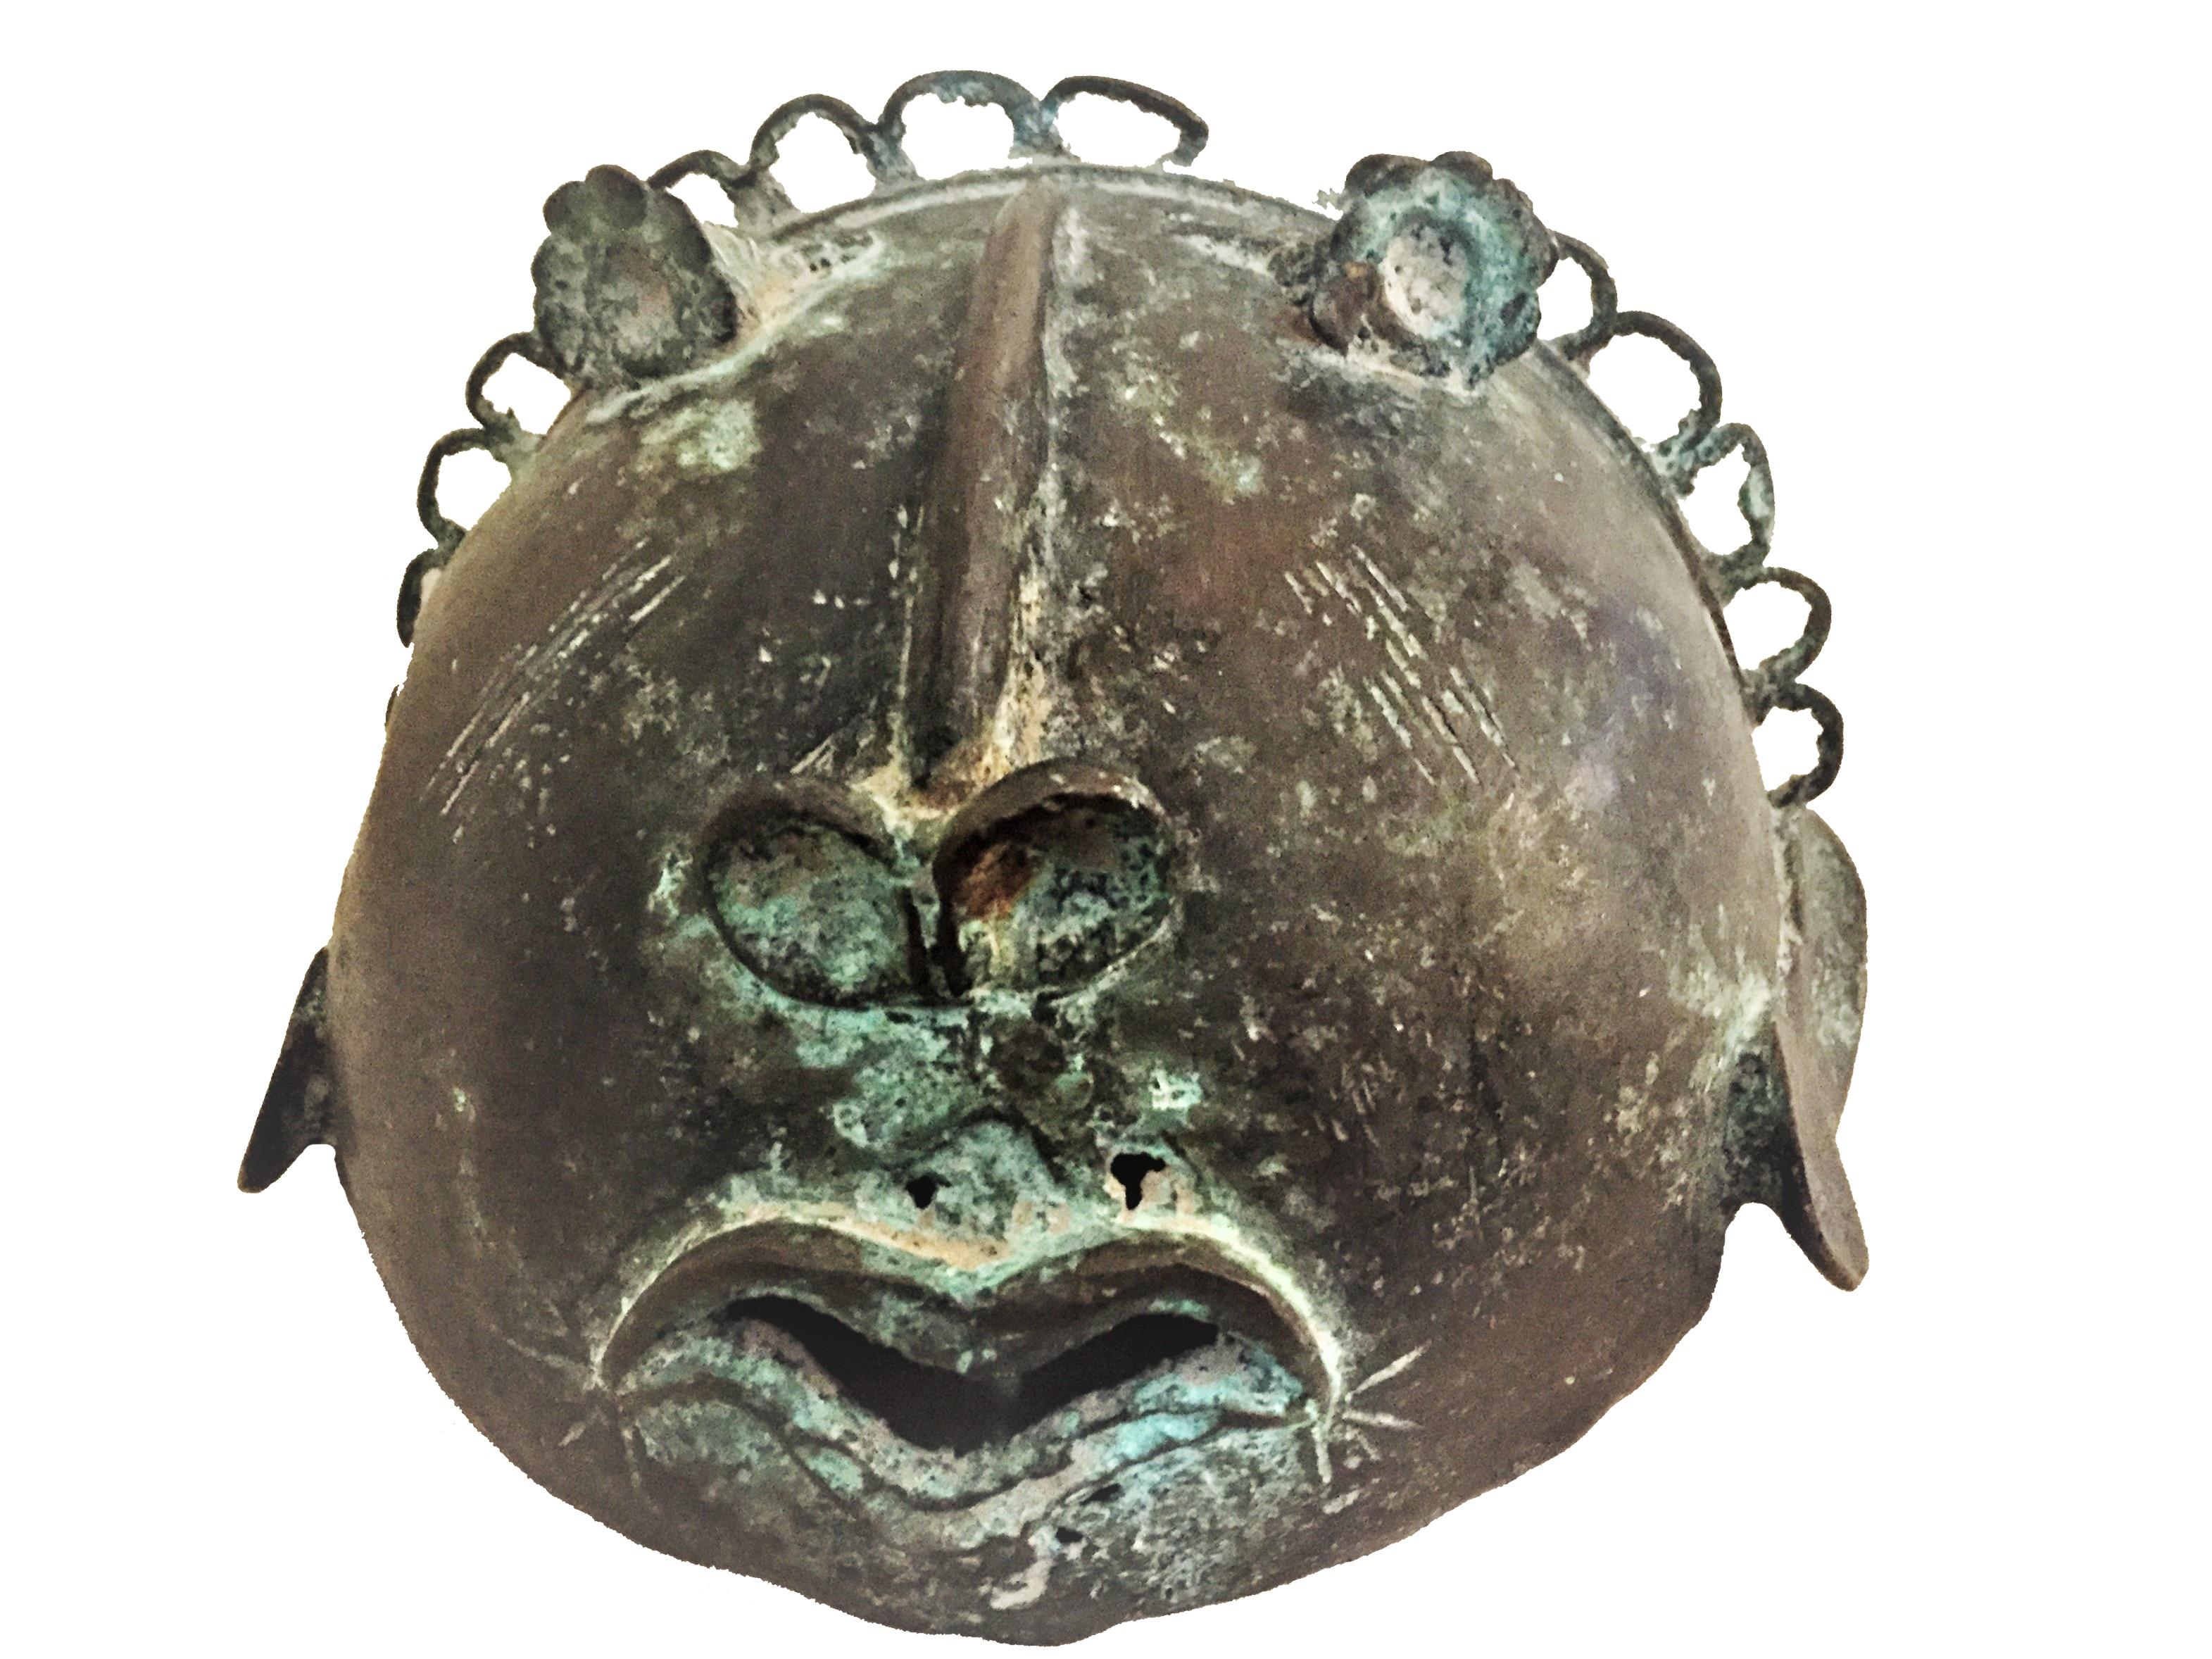 Africano Maschera rituale africana in bronzo ossidato, periodo Art Déco, anni '20 in vendita